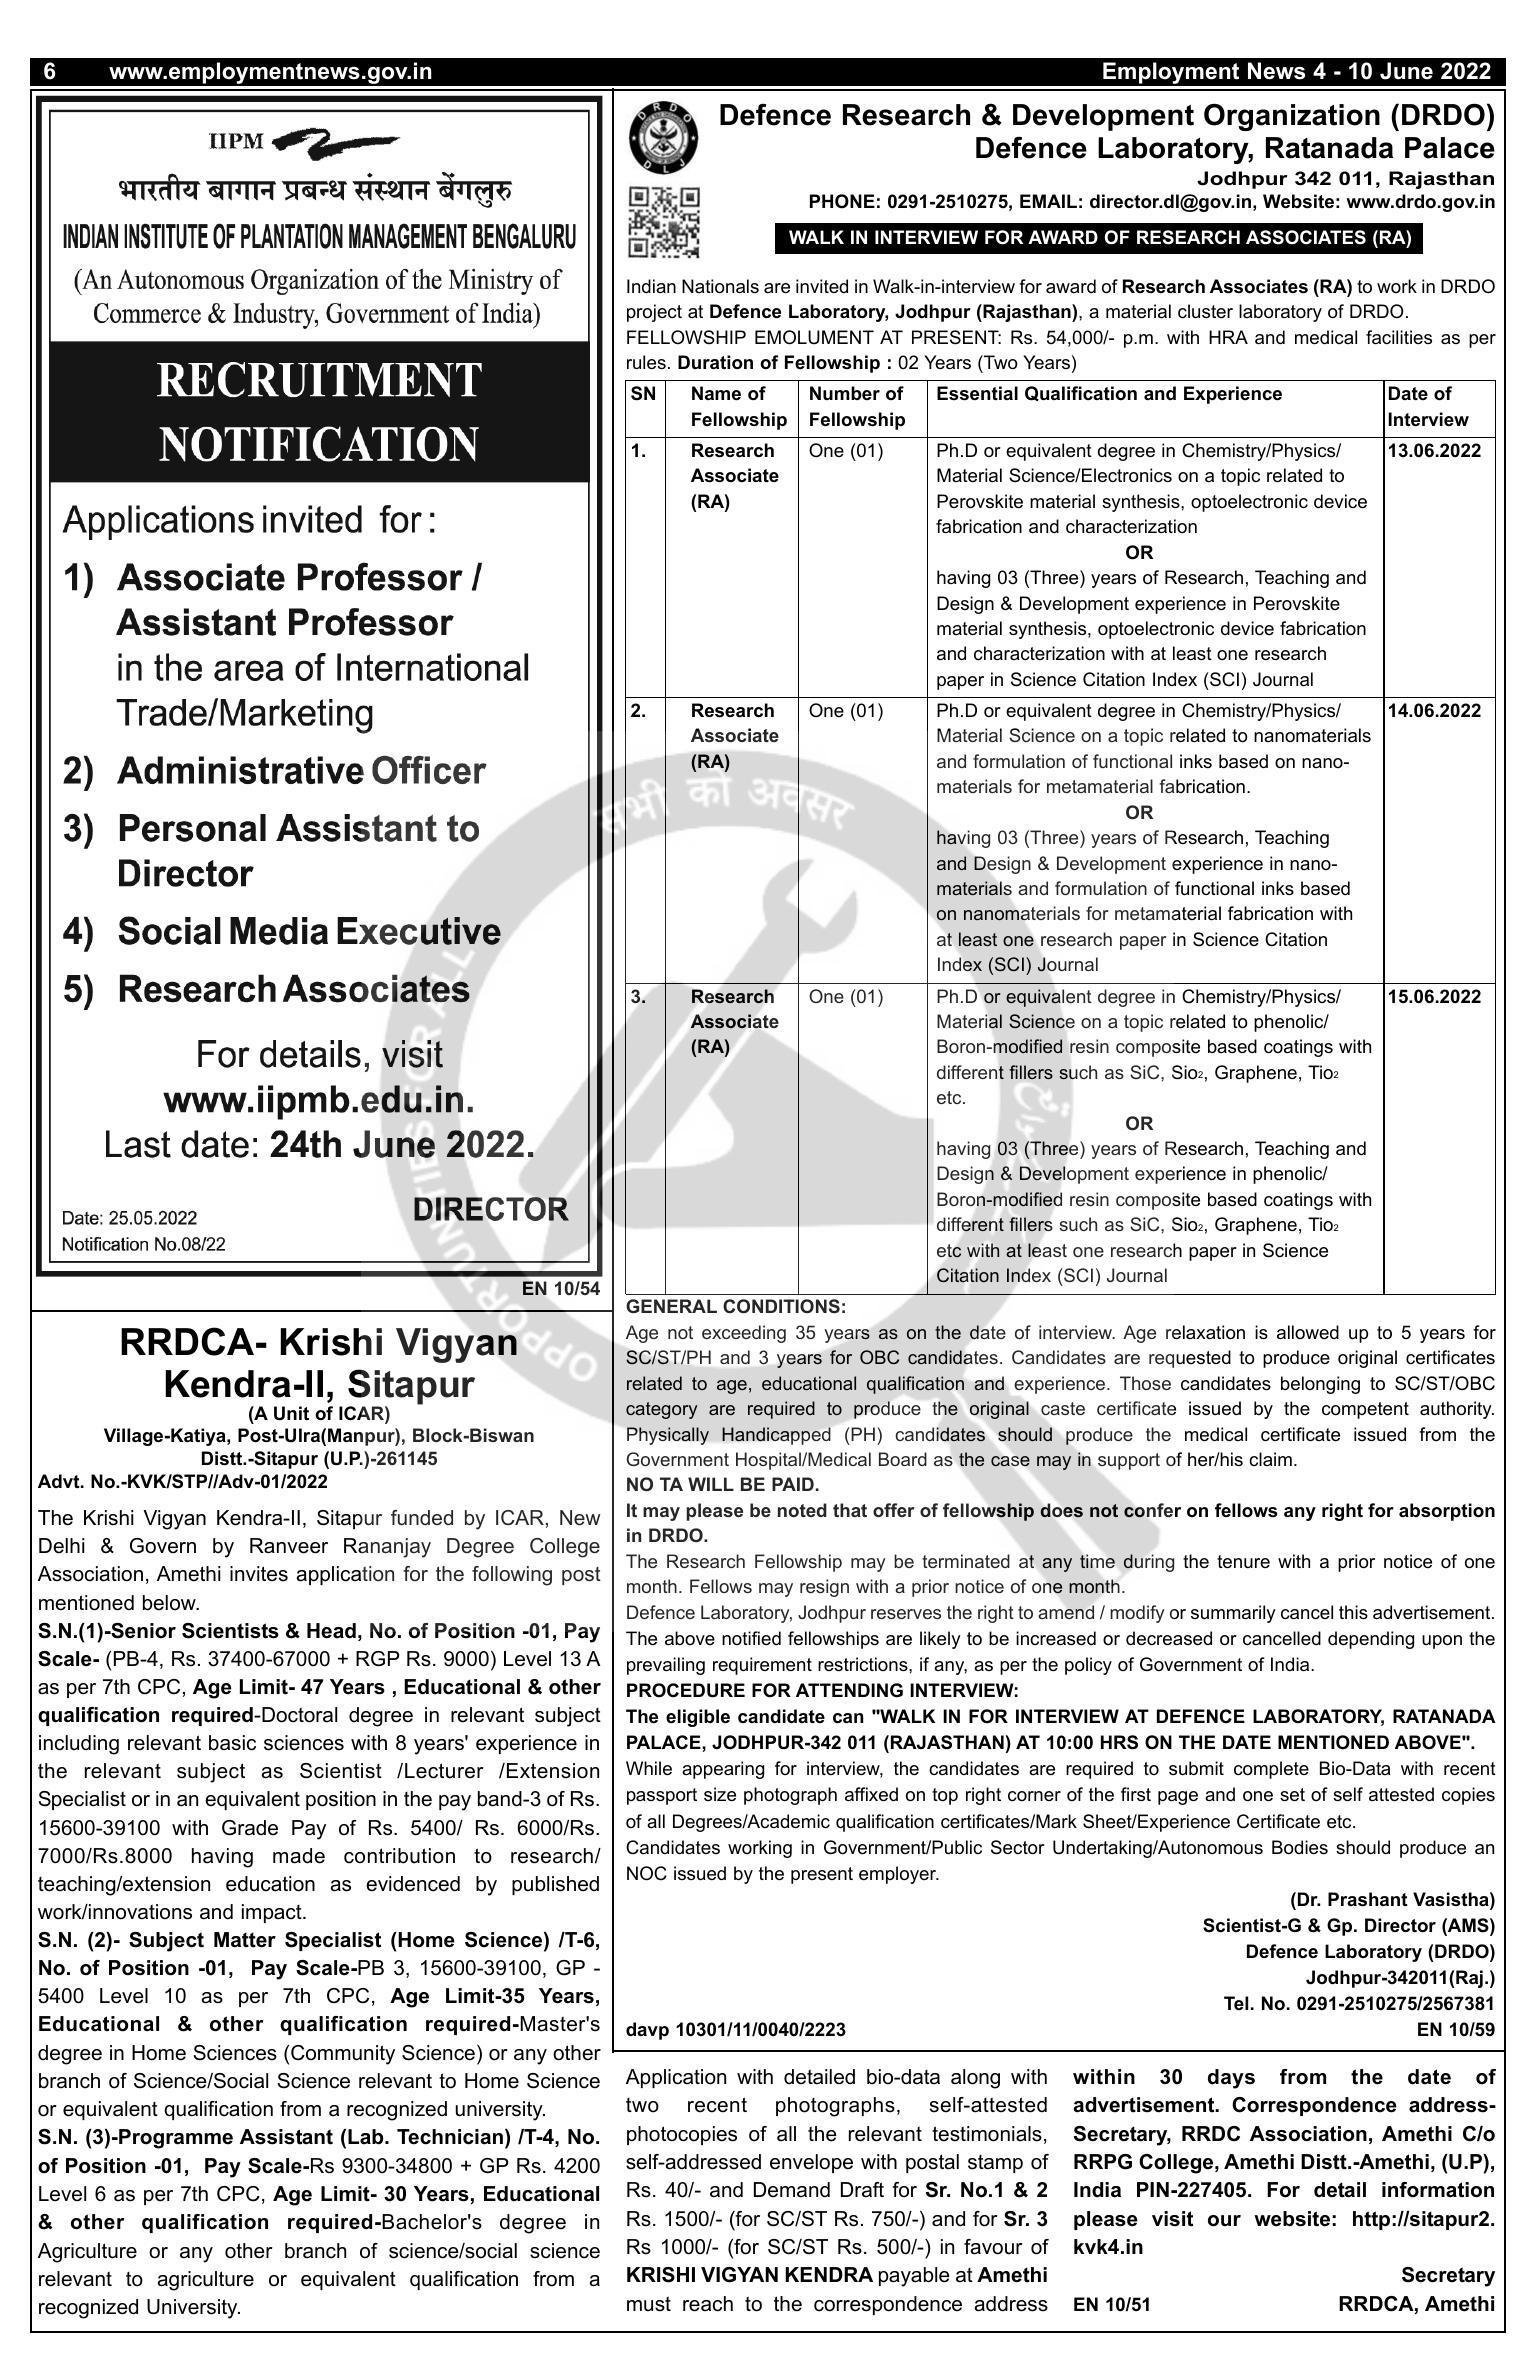 Defence Laboratory Jodhpur (DLJ) Research Associate (RA) Recruitment 2022 - Page 1